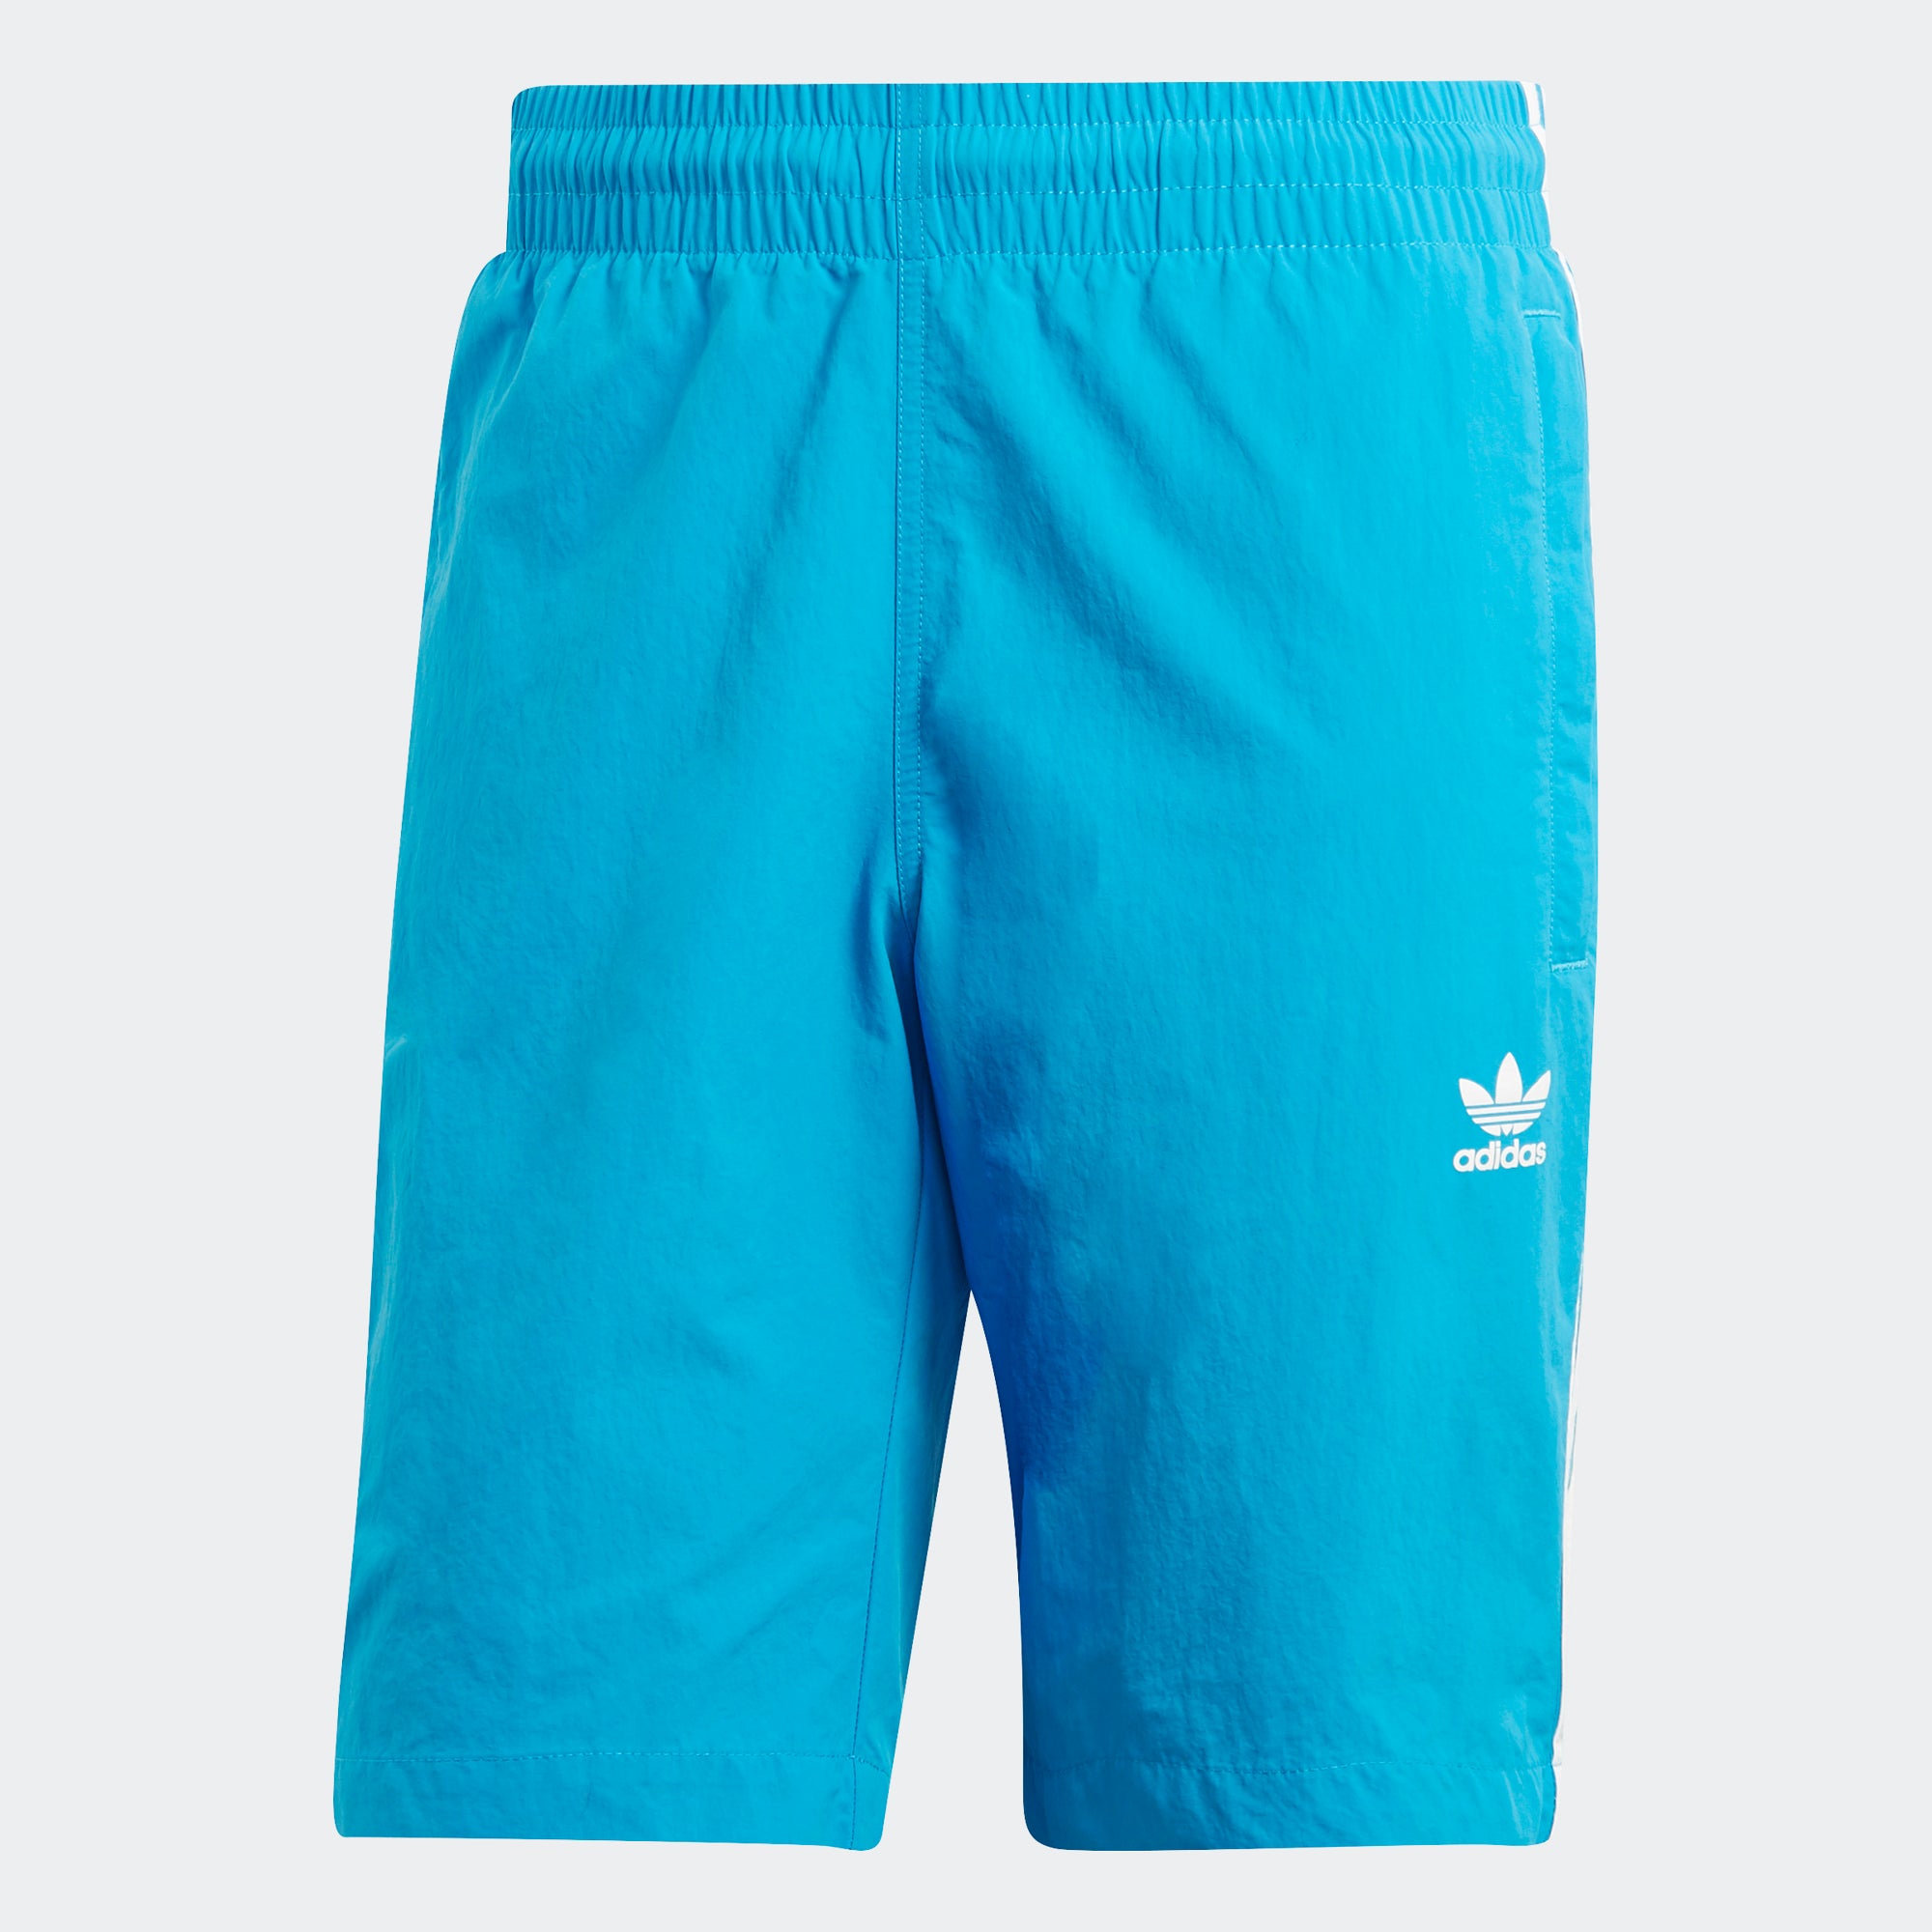 adidas 3 stripe swim shorts mens